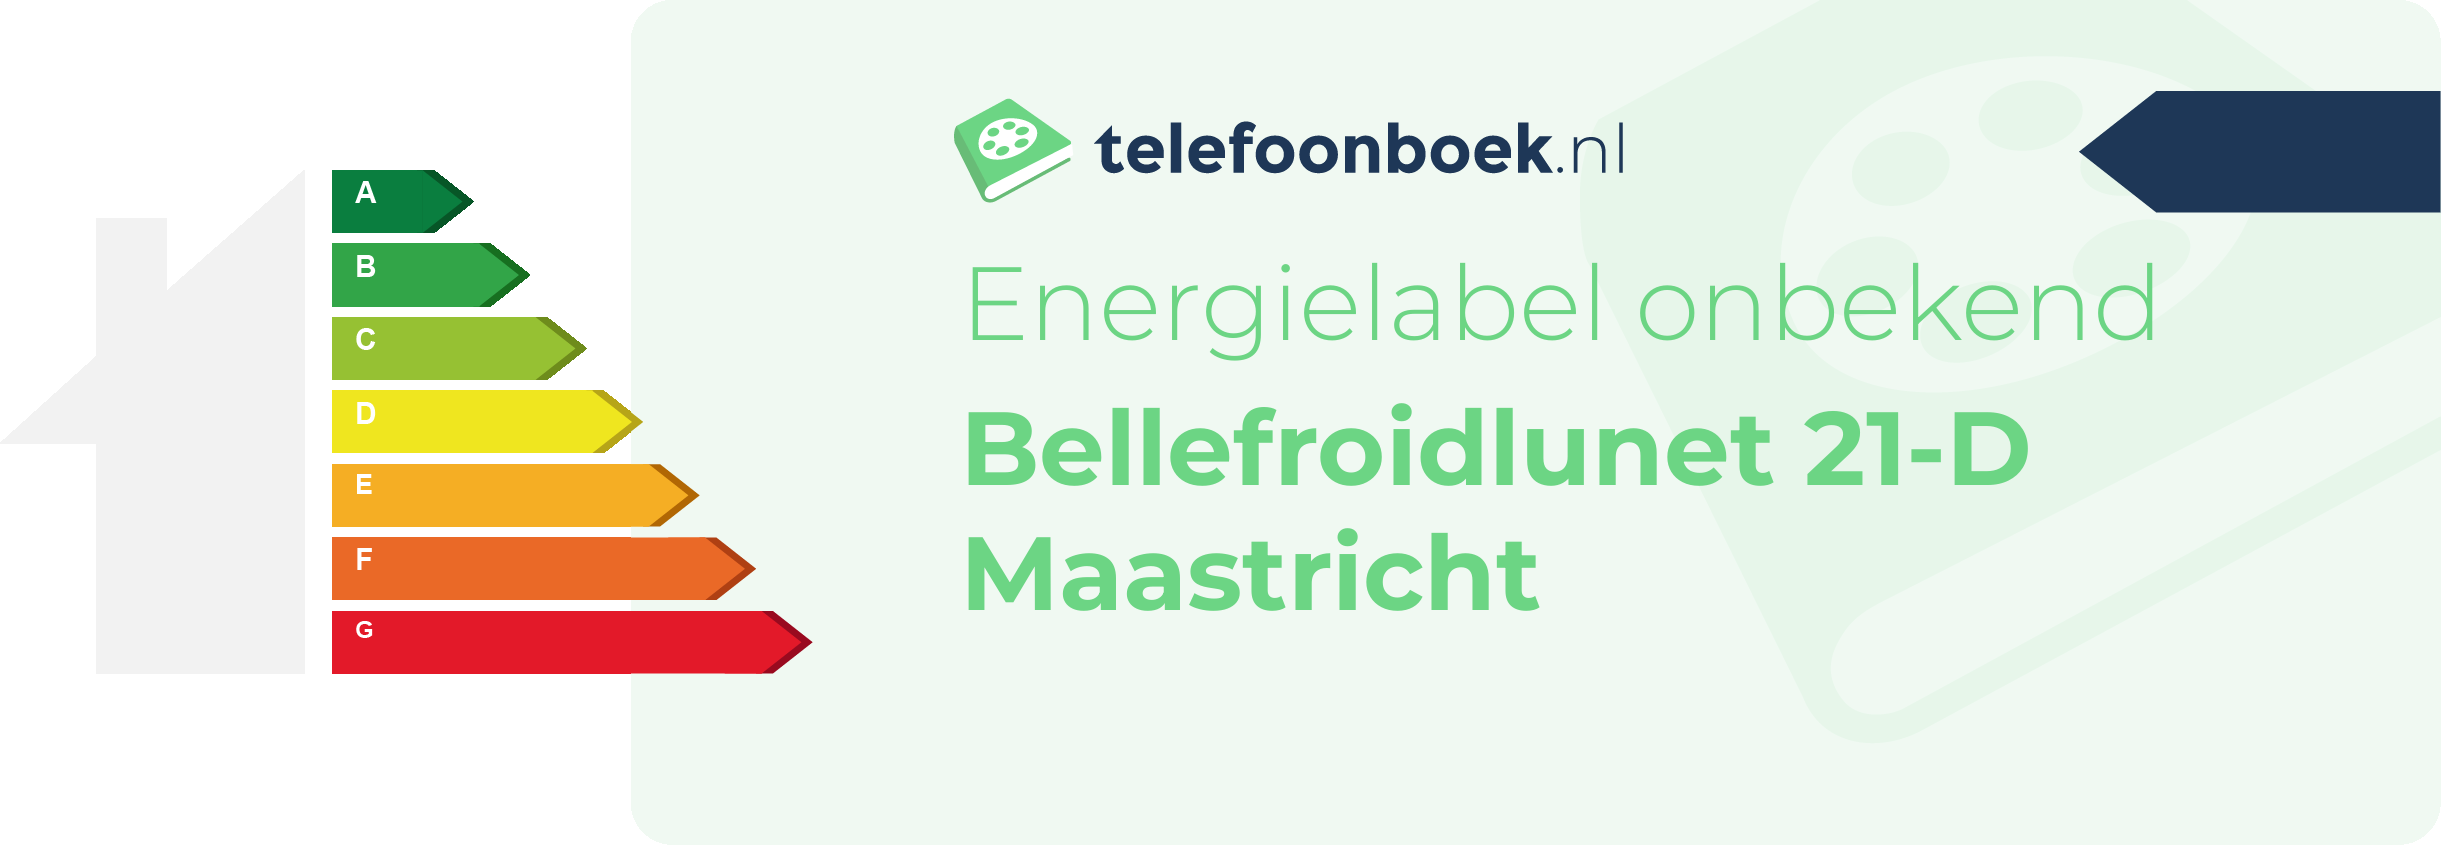 Energielabel Bellefroidlunet 21-D Maastricht